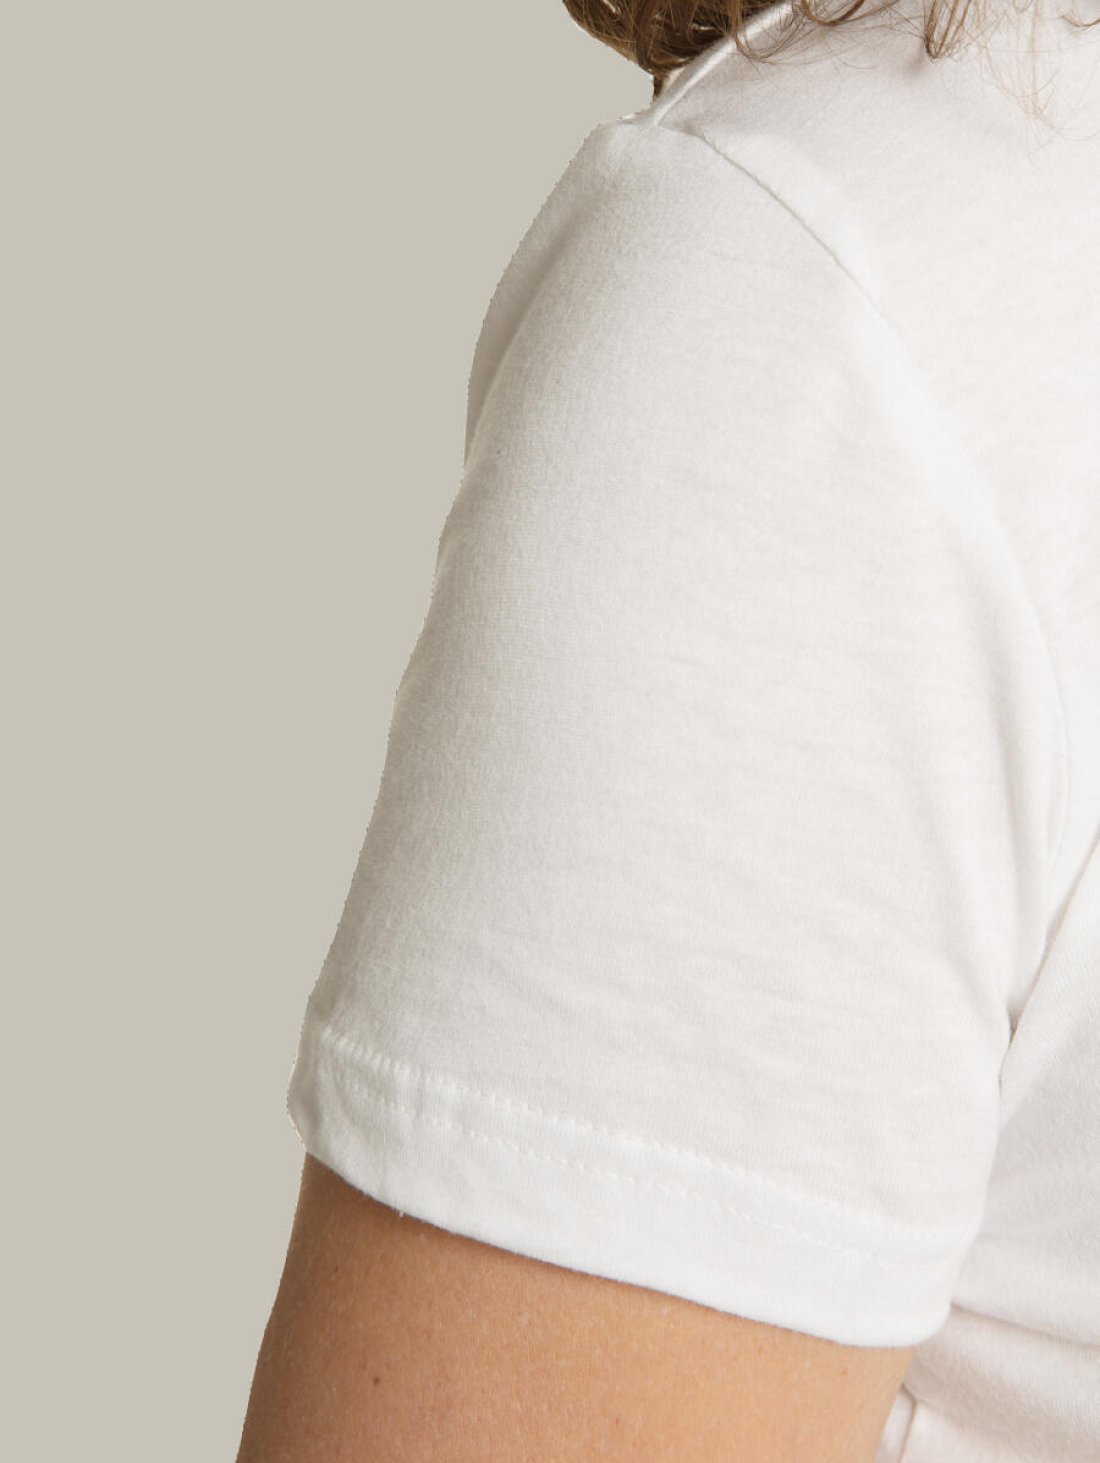 Жіноча футболка, біла з принтом аватара Hopper 061